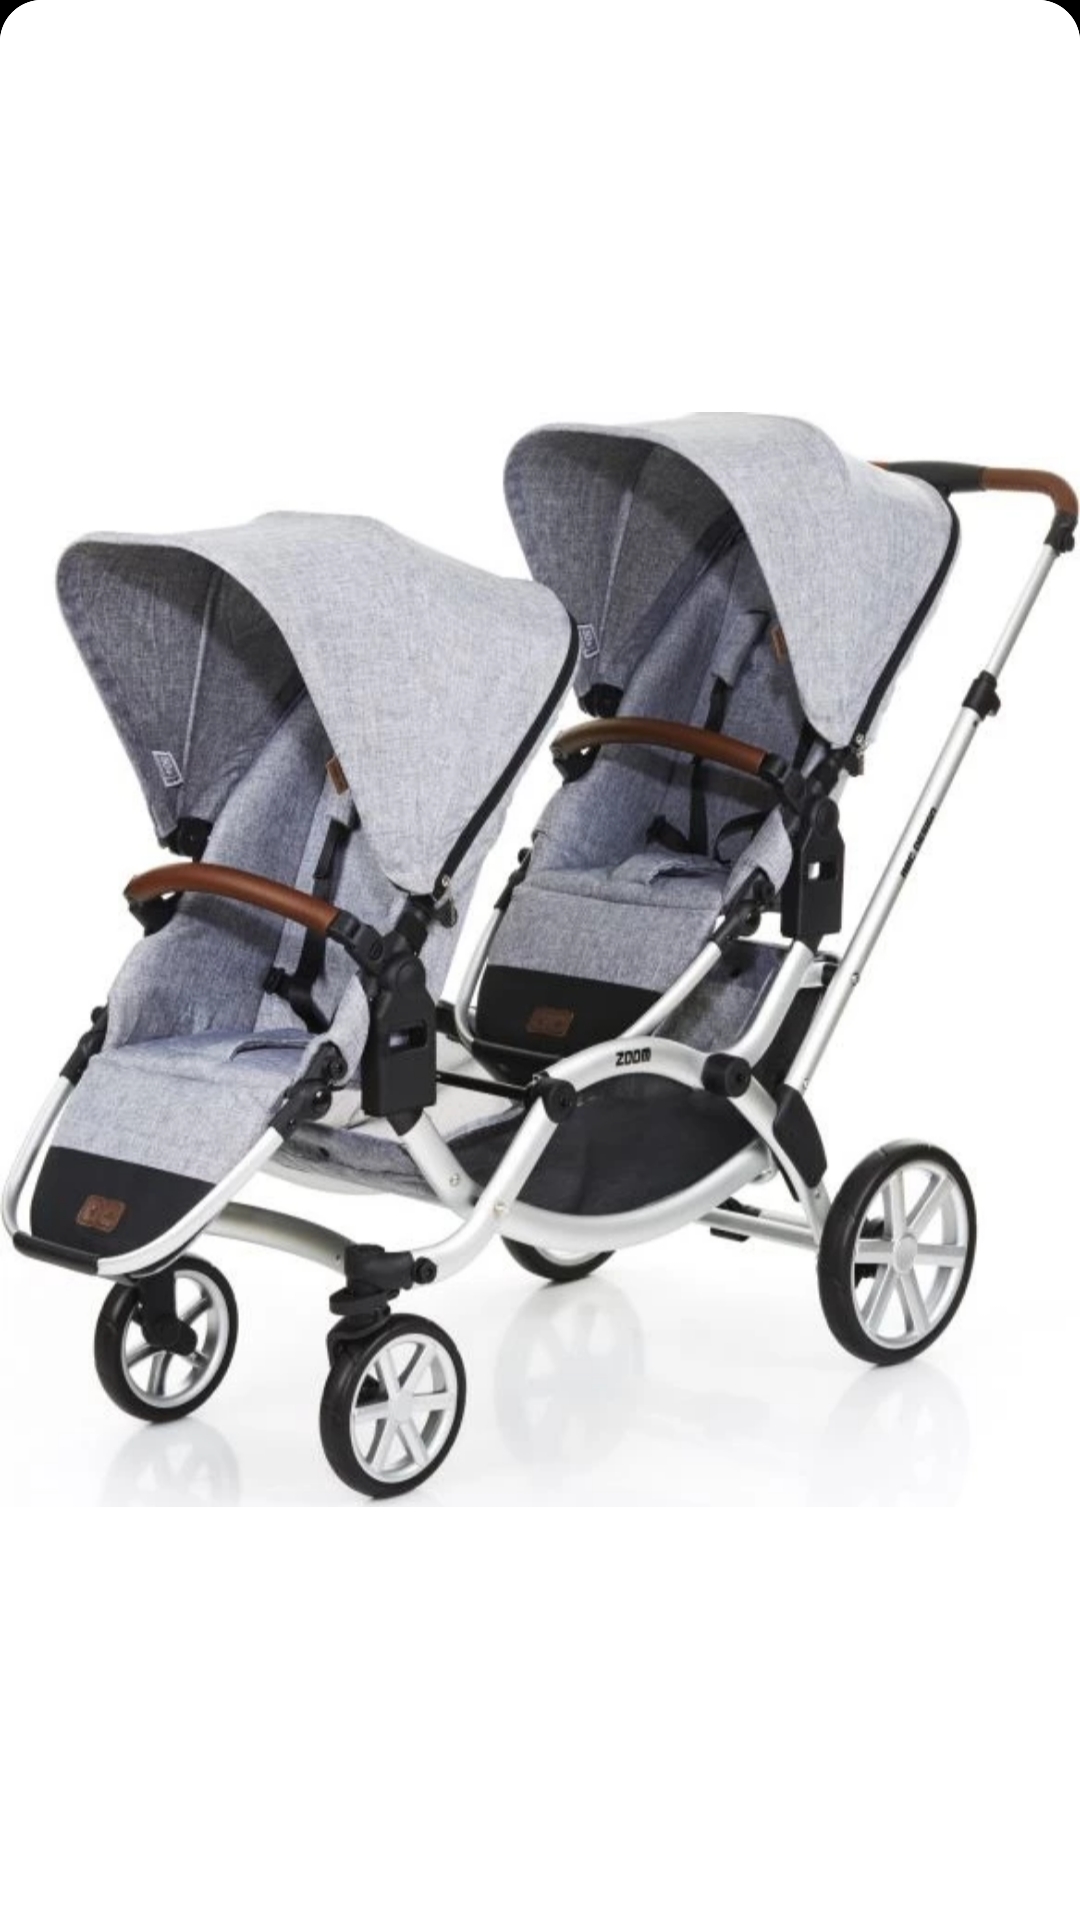 Design-Zoom-Twin-Baby-Stroller-Graphite-Gray